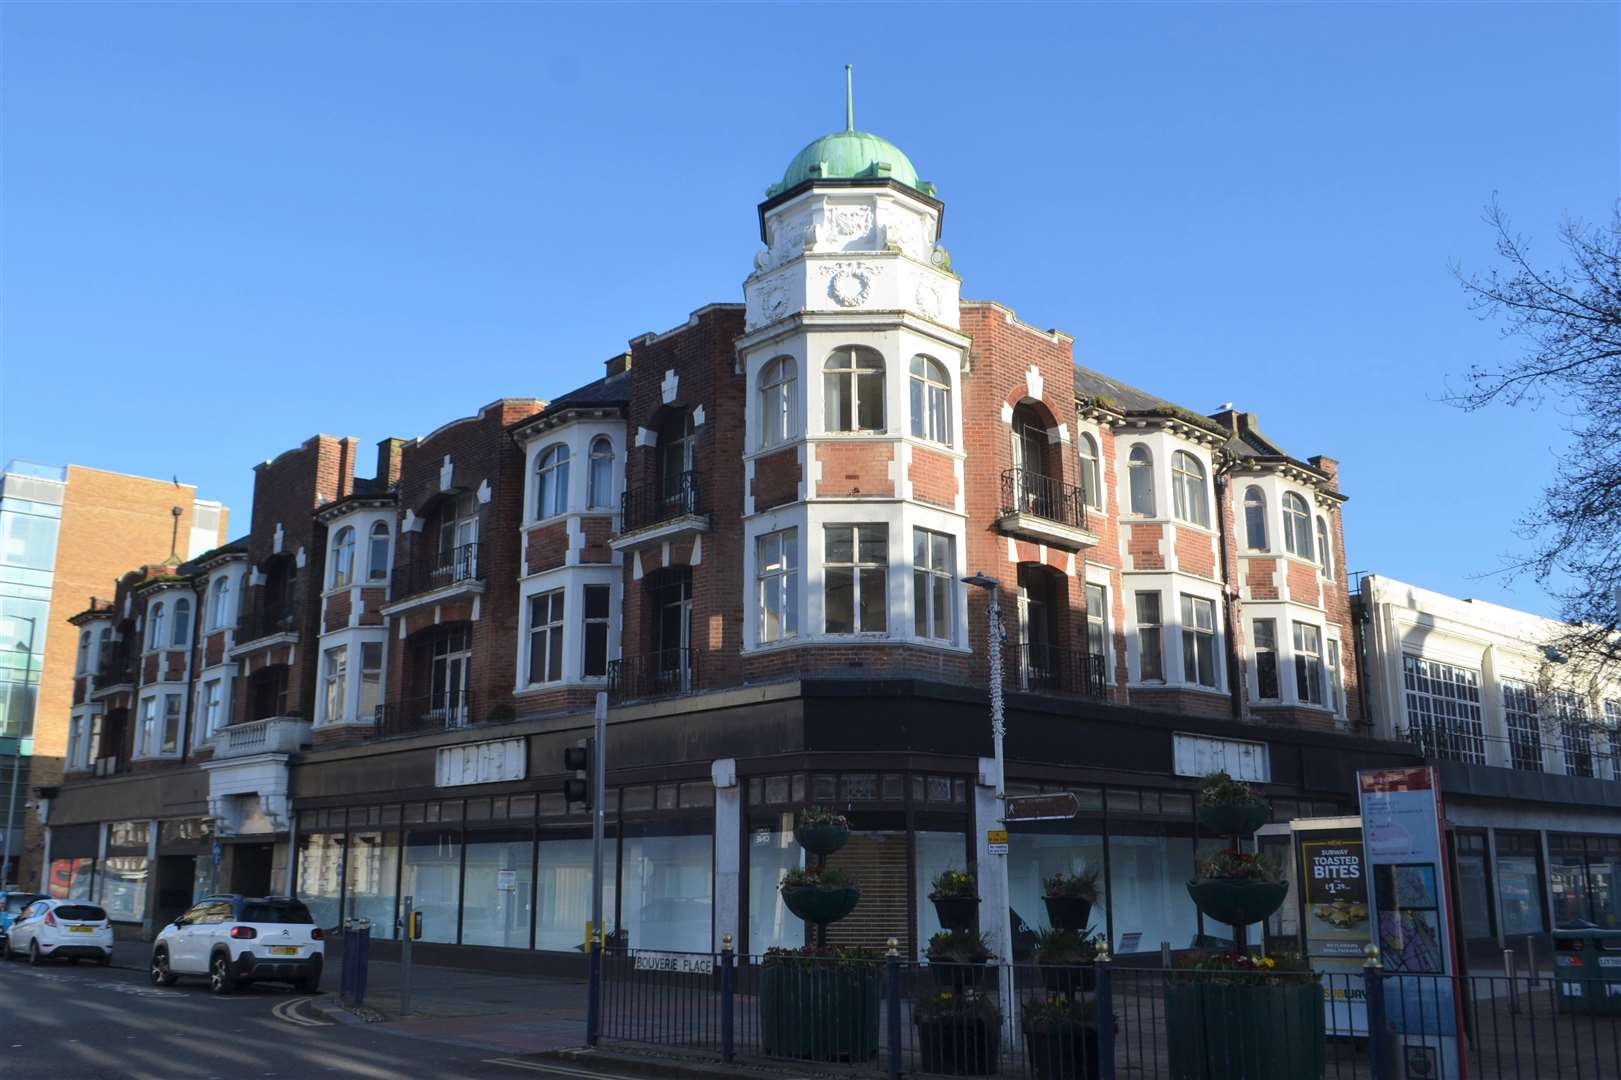 The former Debenhams store in Folkestone has been bought for £2 million